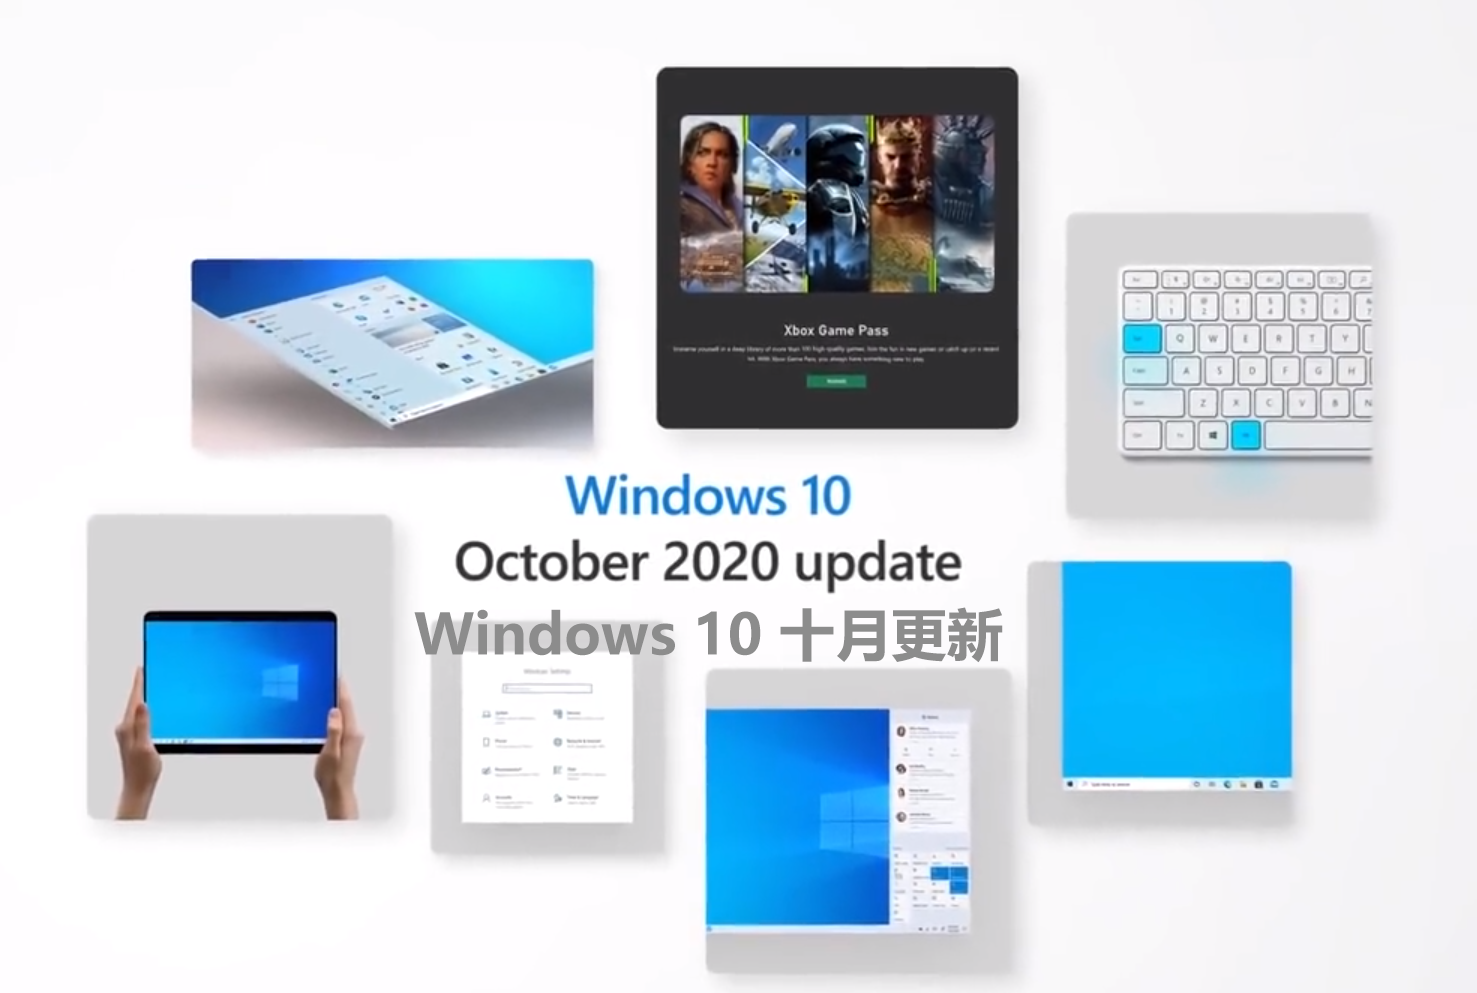 ΢MSDN Windows 10 x64 20H2 202010¸19042.631